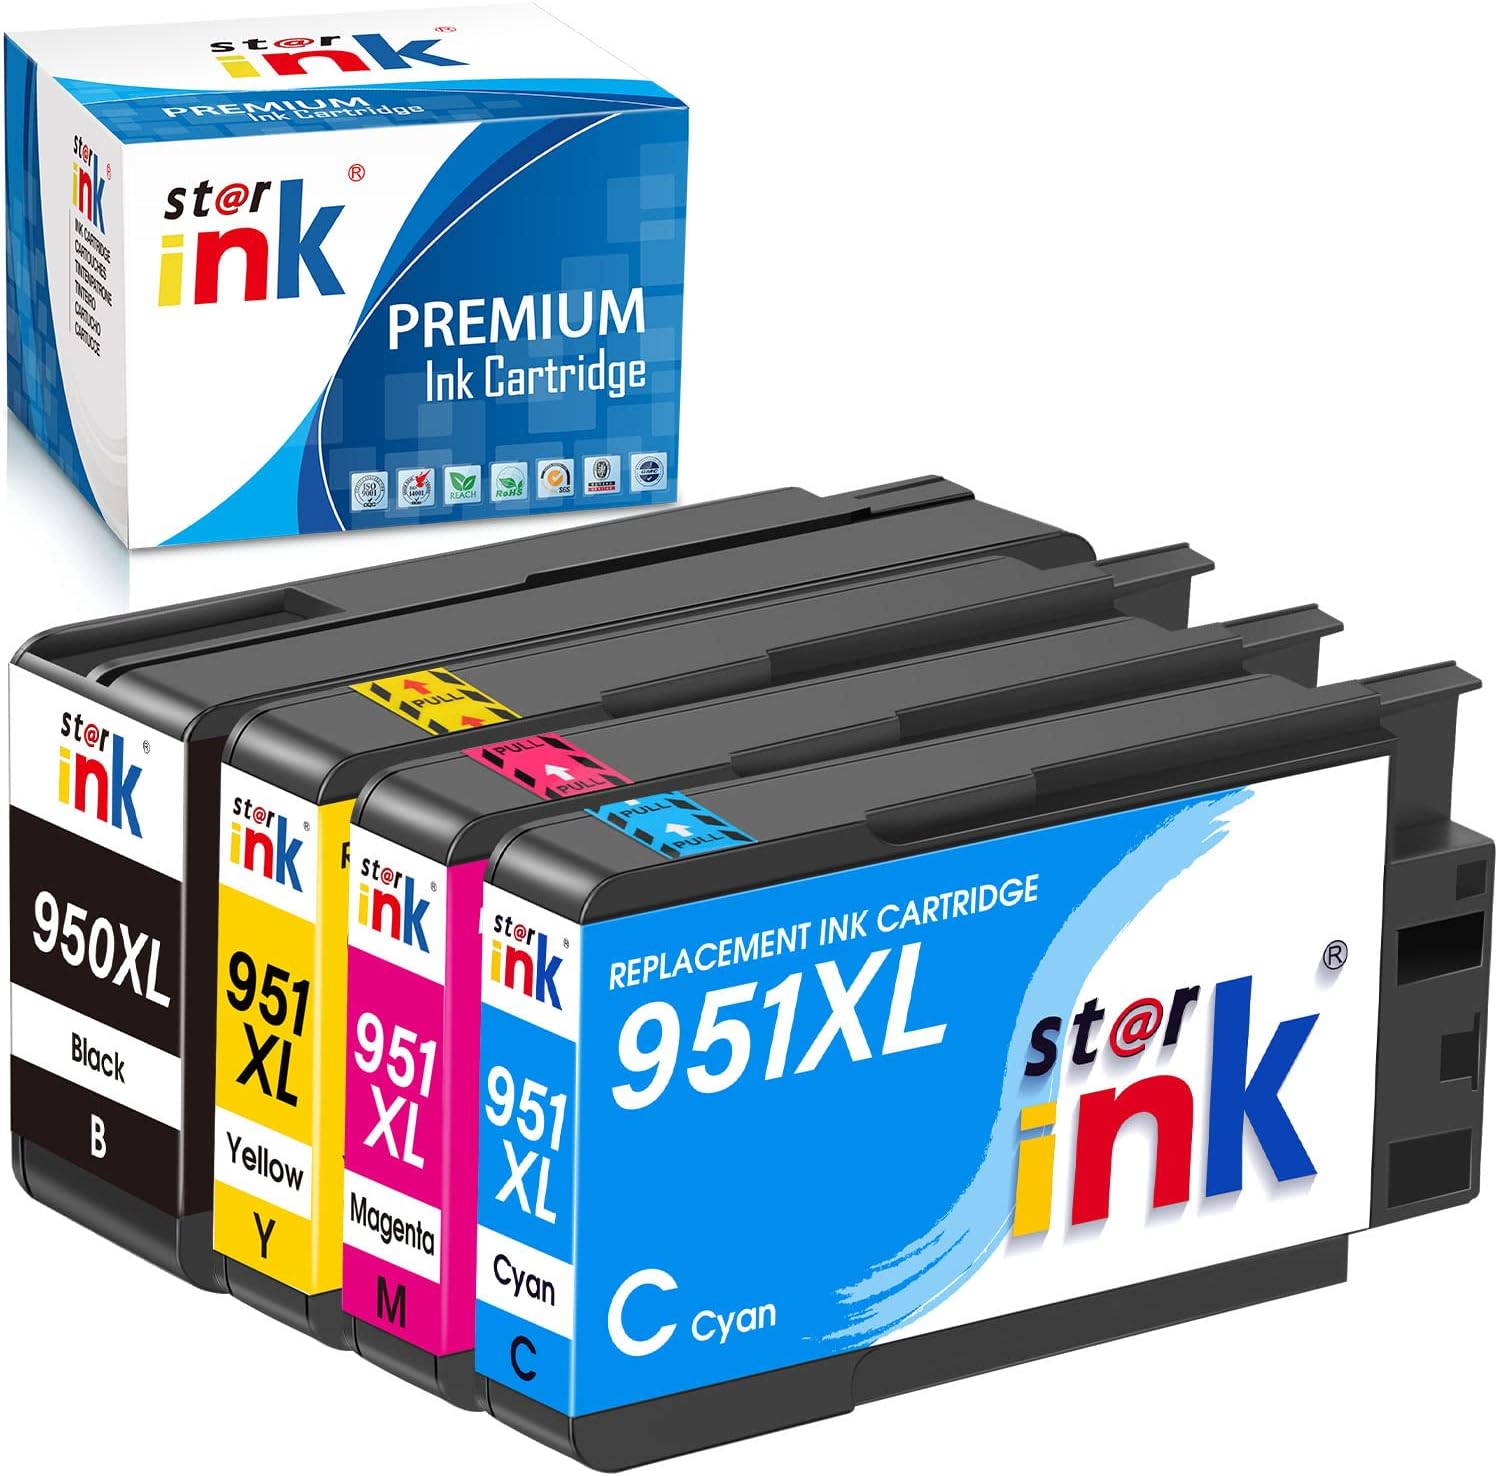 HP 950XL 951XL Combo Pack Ink Cartridges (Black Cyan Magenta Yellow) 4